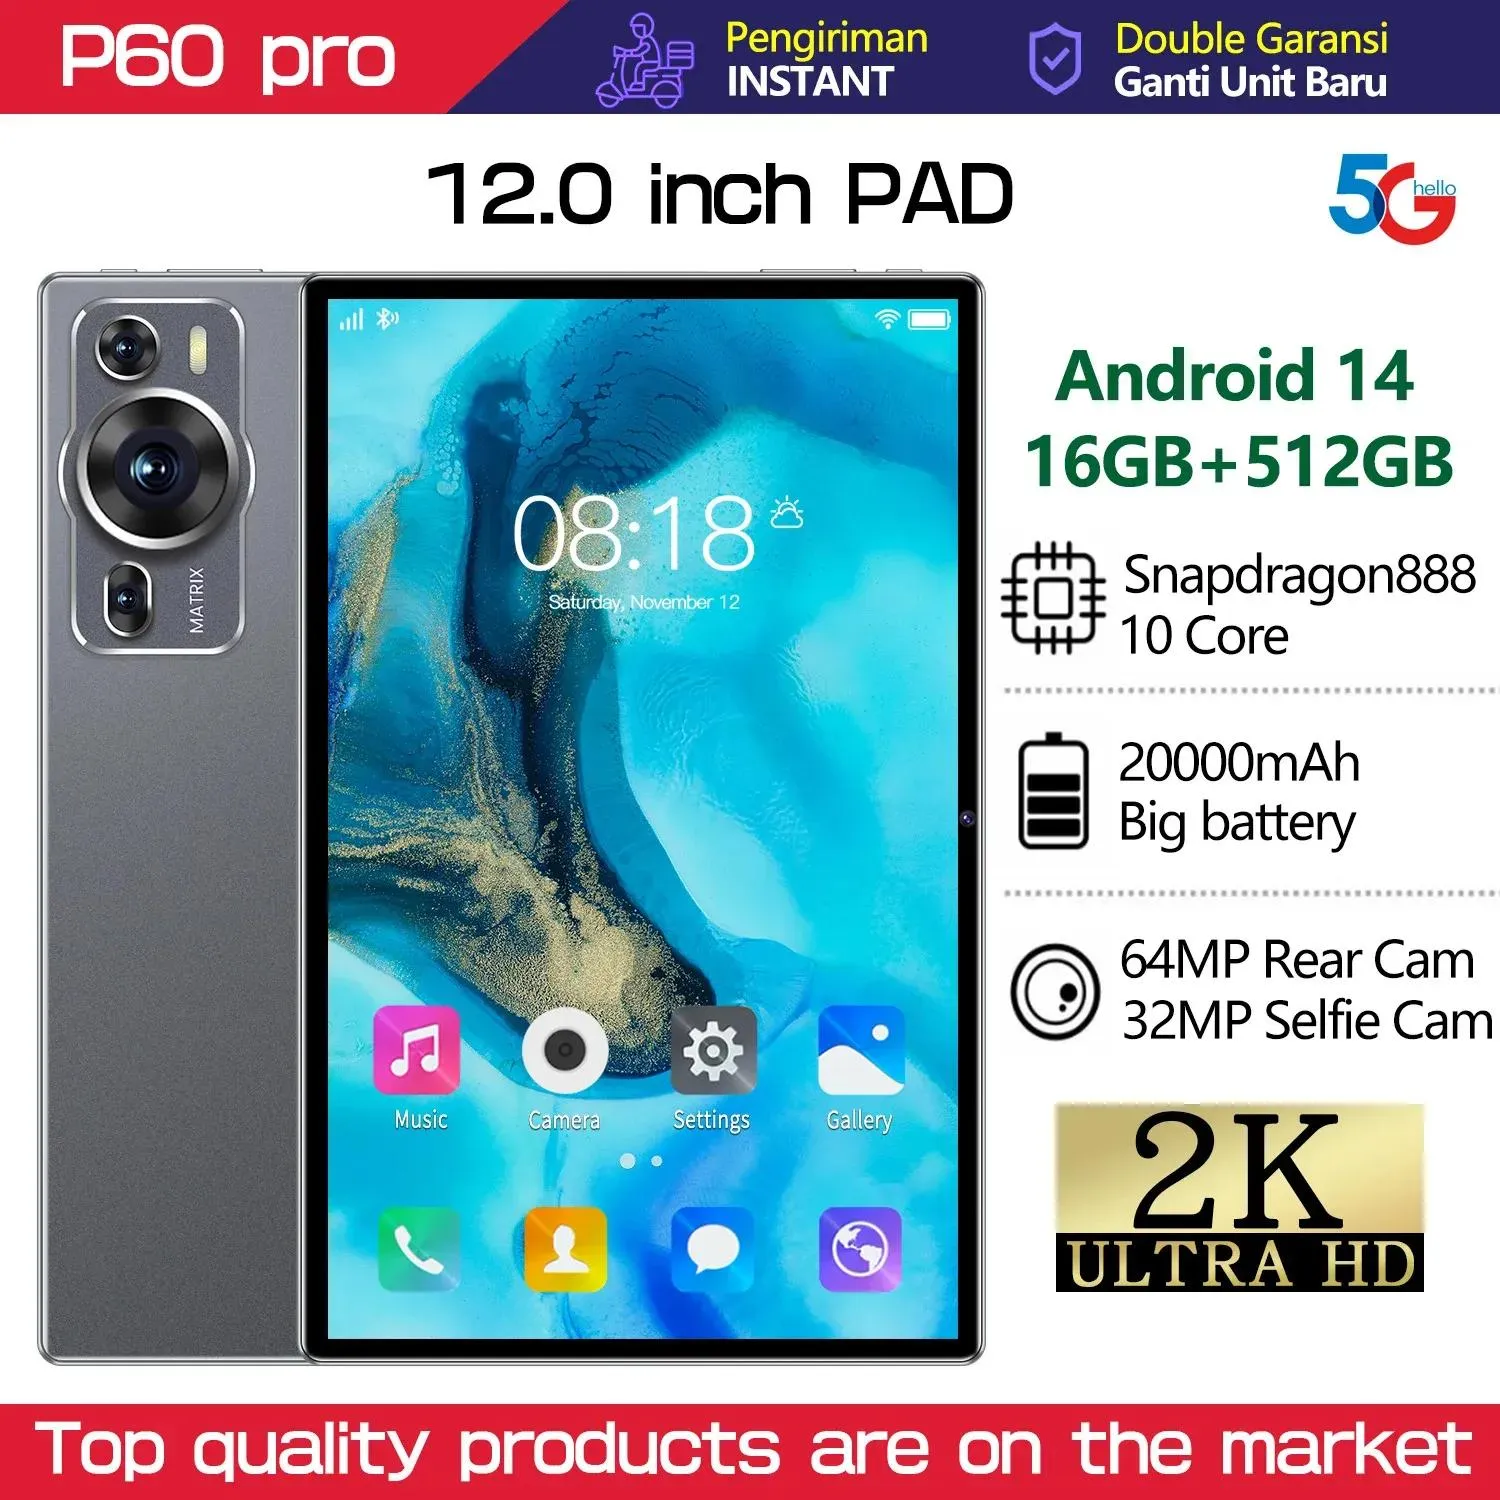 PC 브랜드 터치 태블릿 안드로이드 P60 Pro Global Tablette 12.0 인치 HD 16G+512GB Snapdragon 888 5G 듀얼 SIM 카드 또는 Wi -Fi Google Play